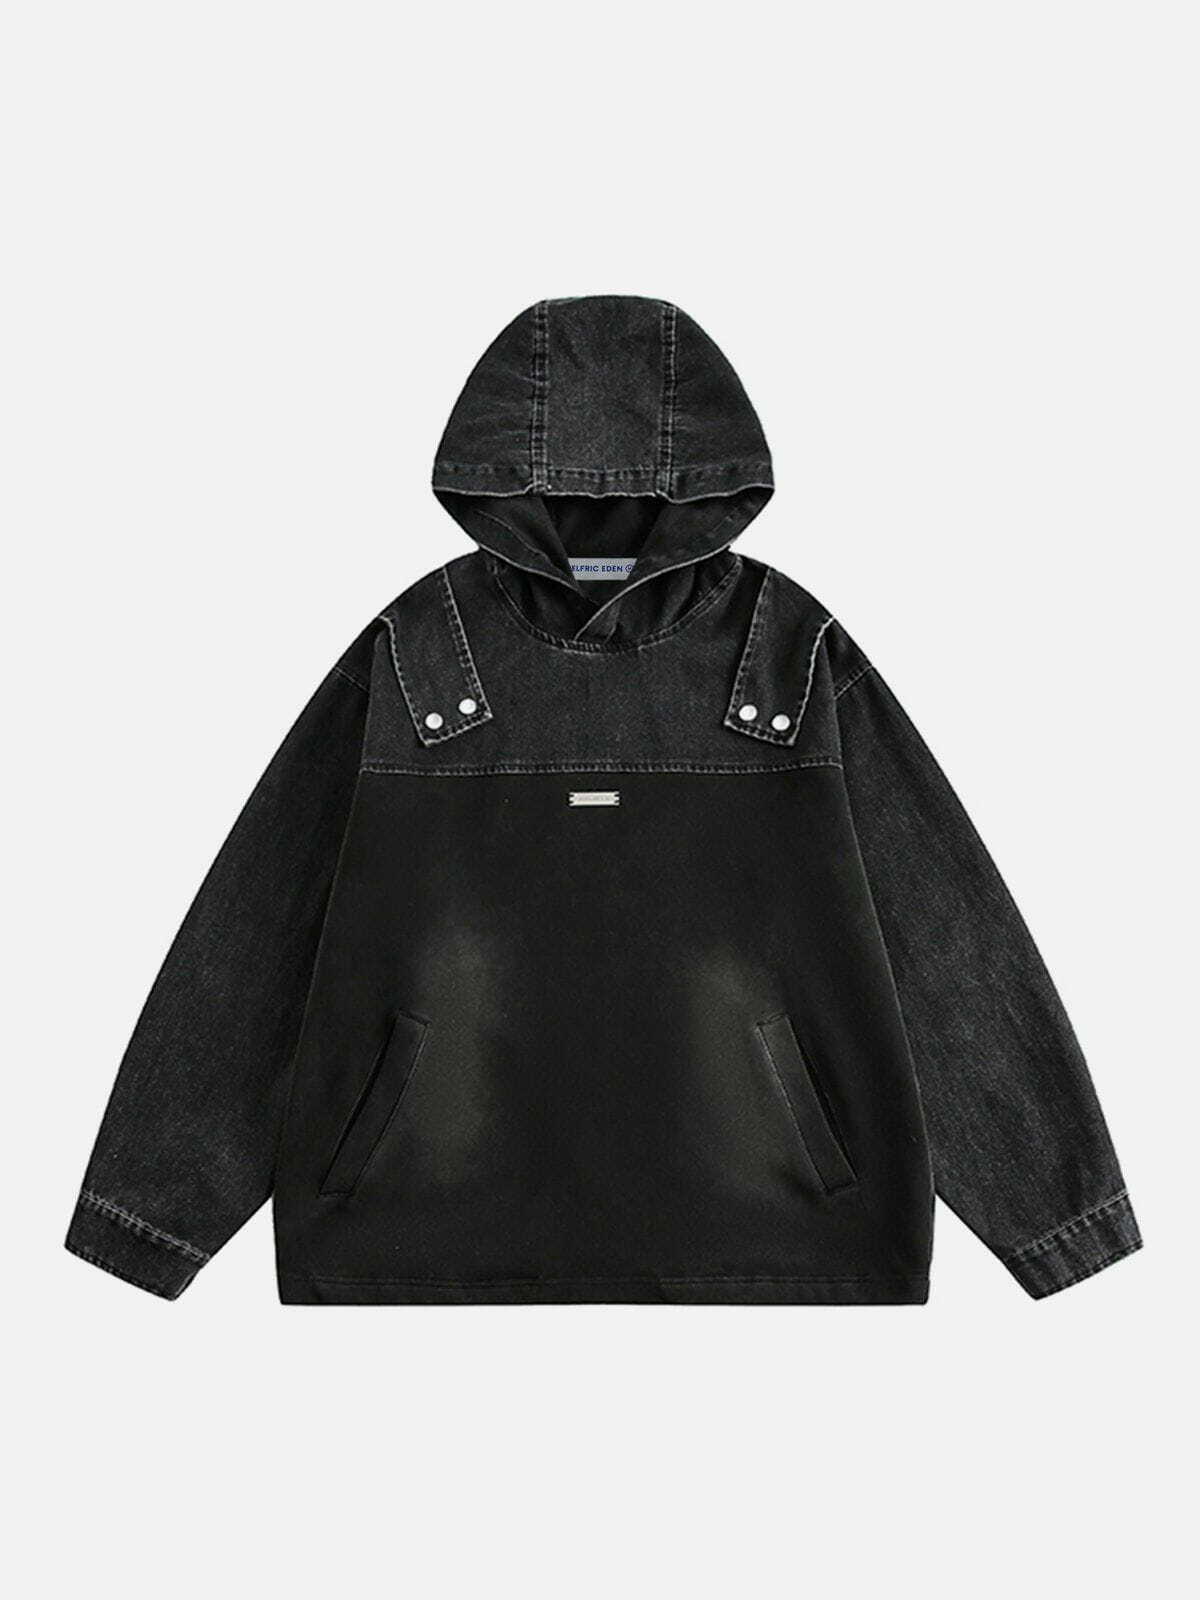 revolutionary solid button hoodie edgy & sleek streetwear 8112